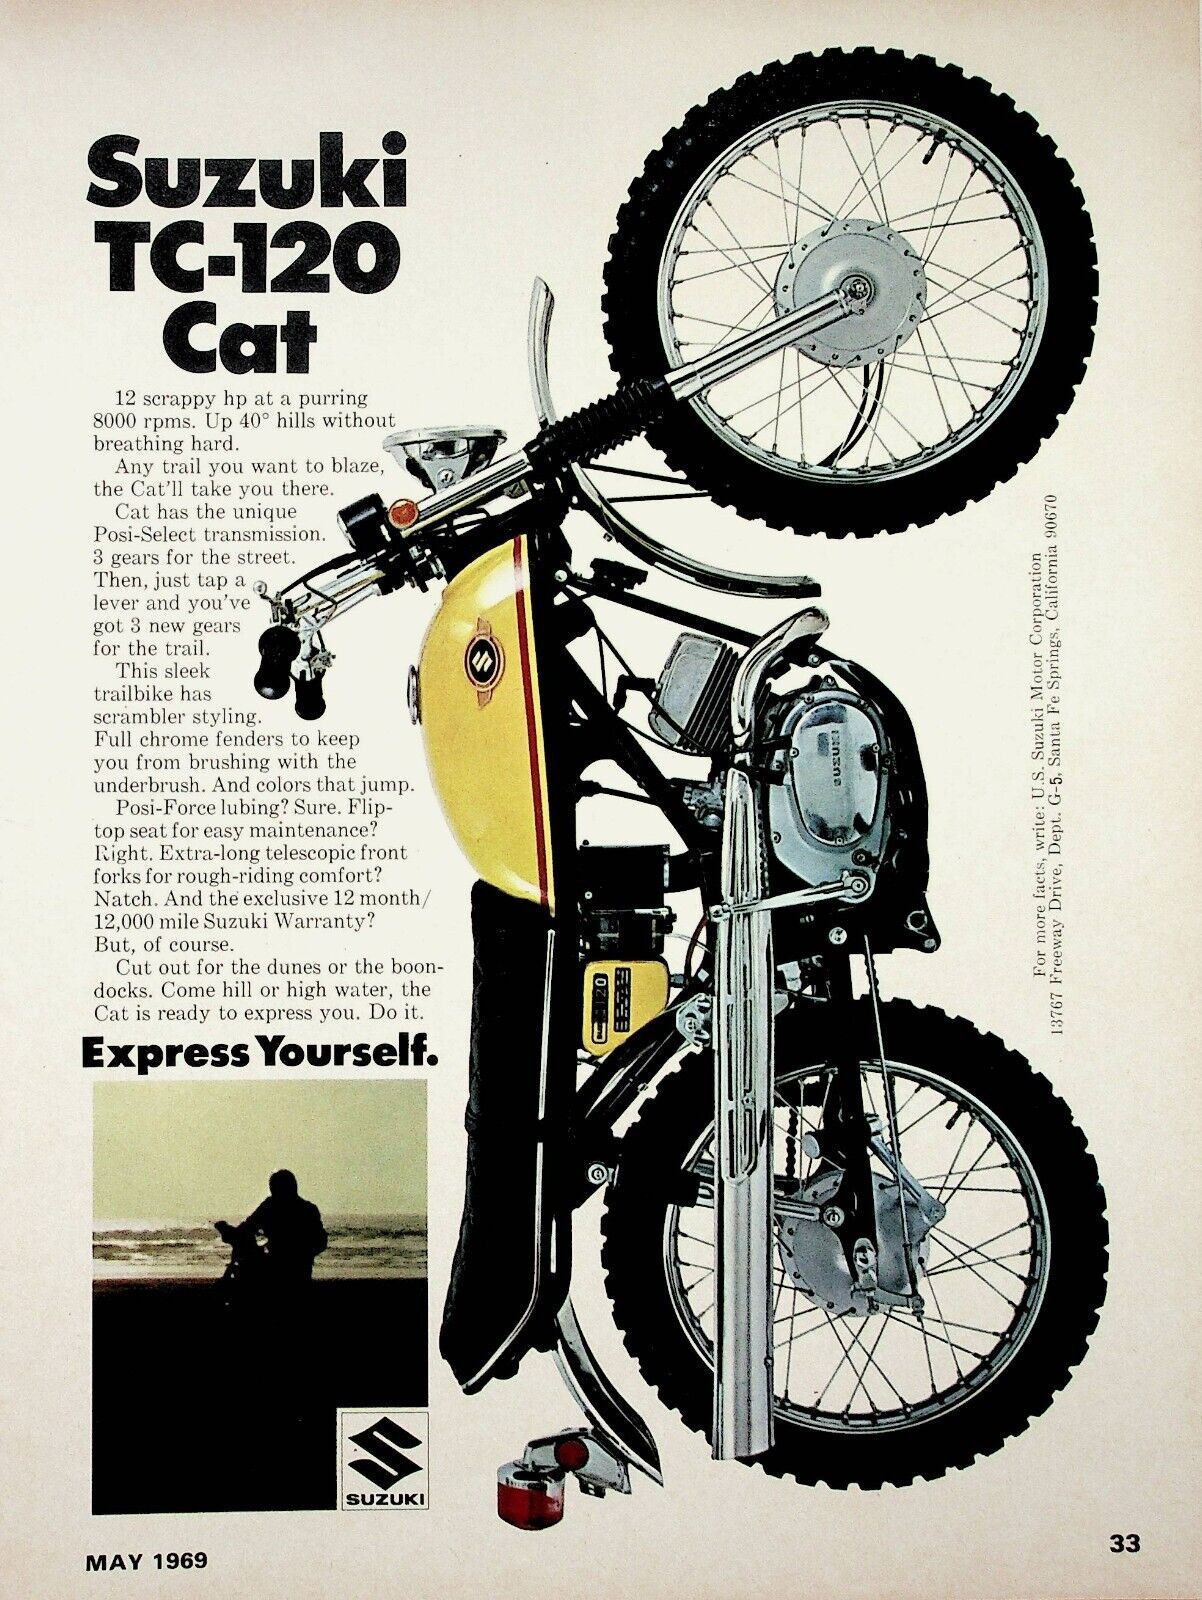 1969 Suzuki TC-120 Cat - Vintage Motorcycle Ad